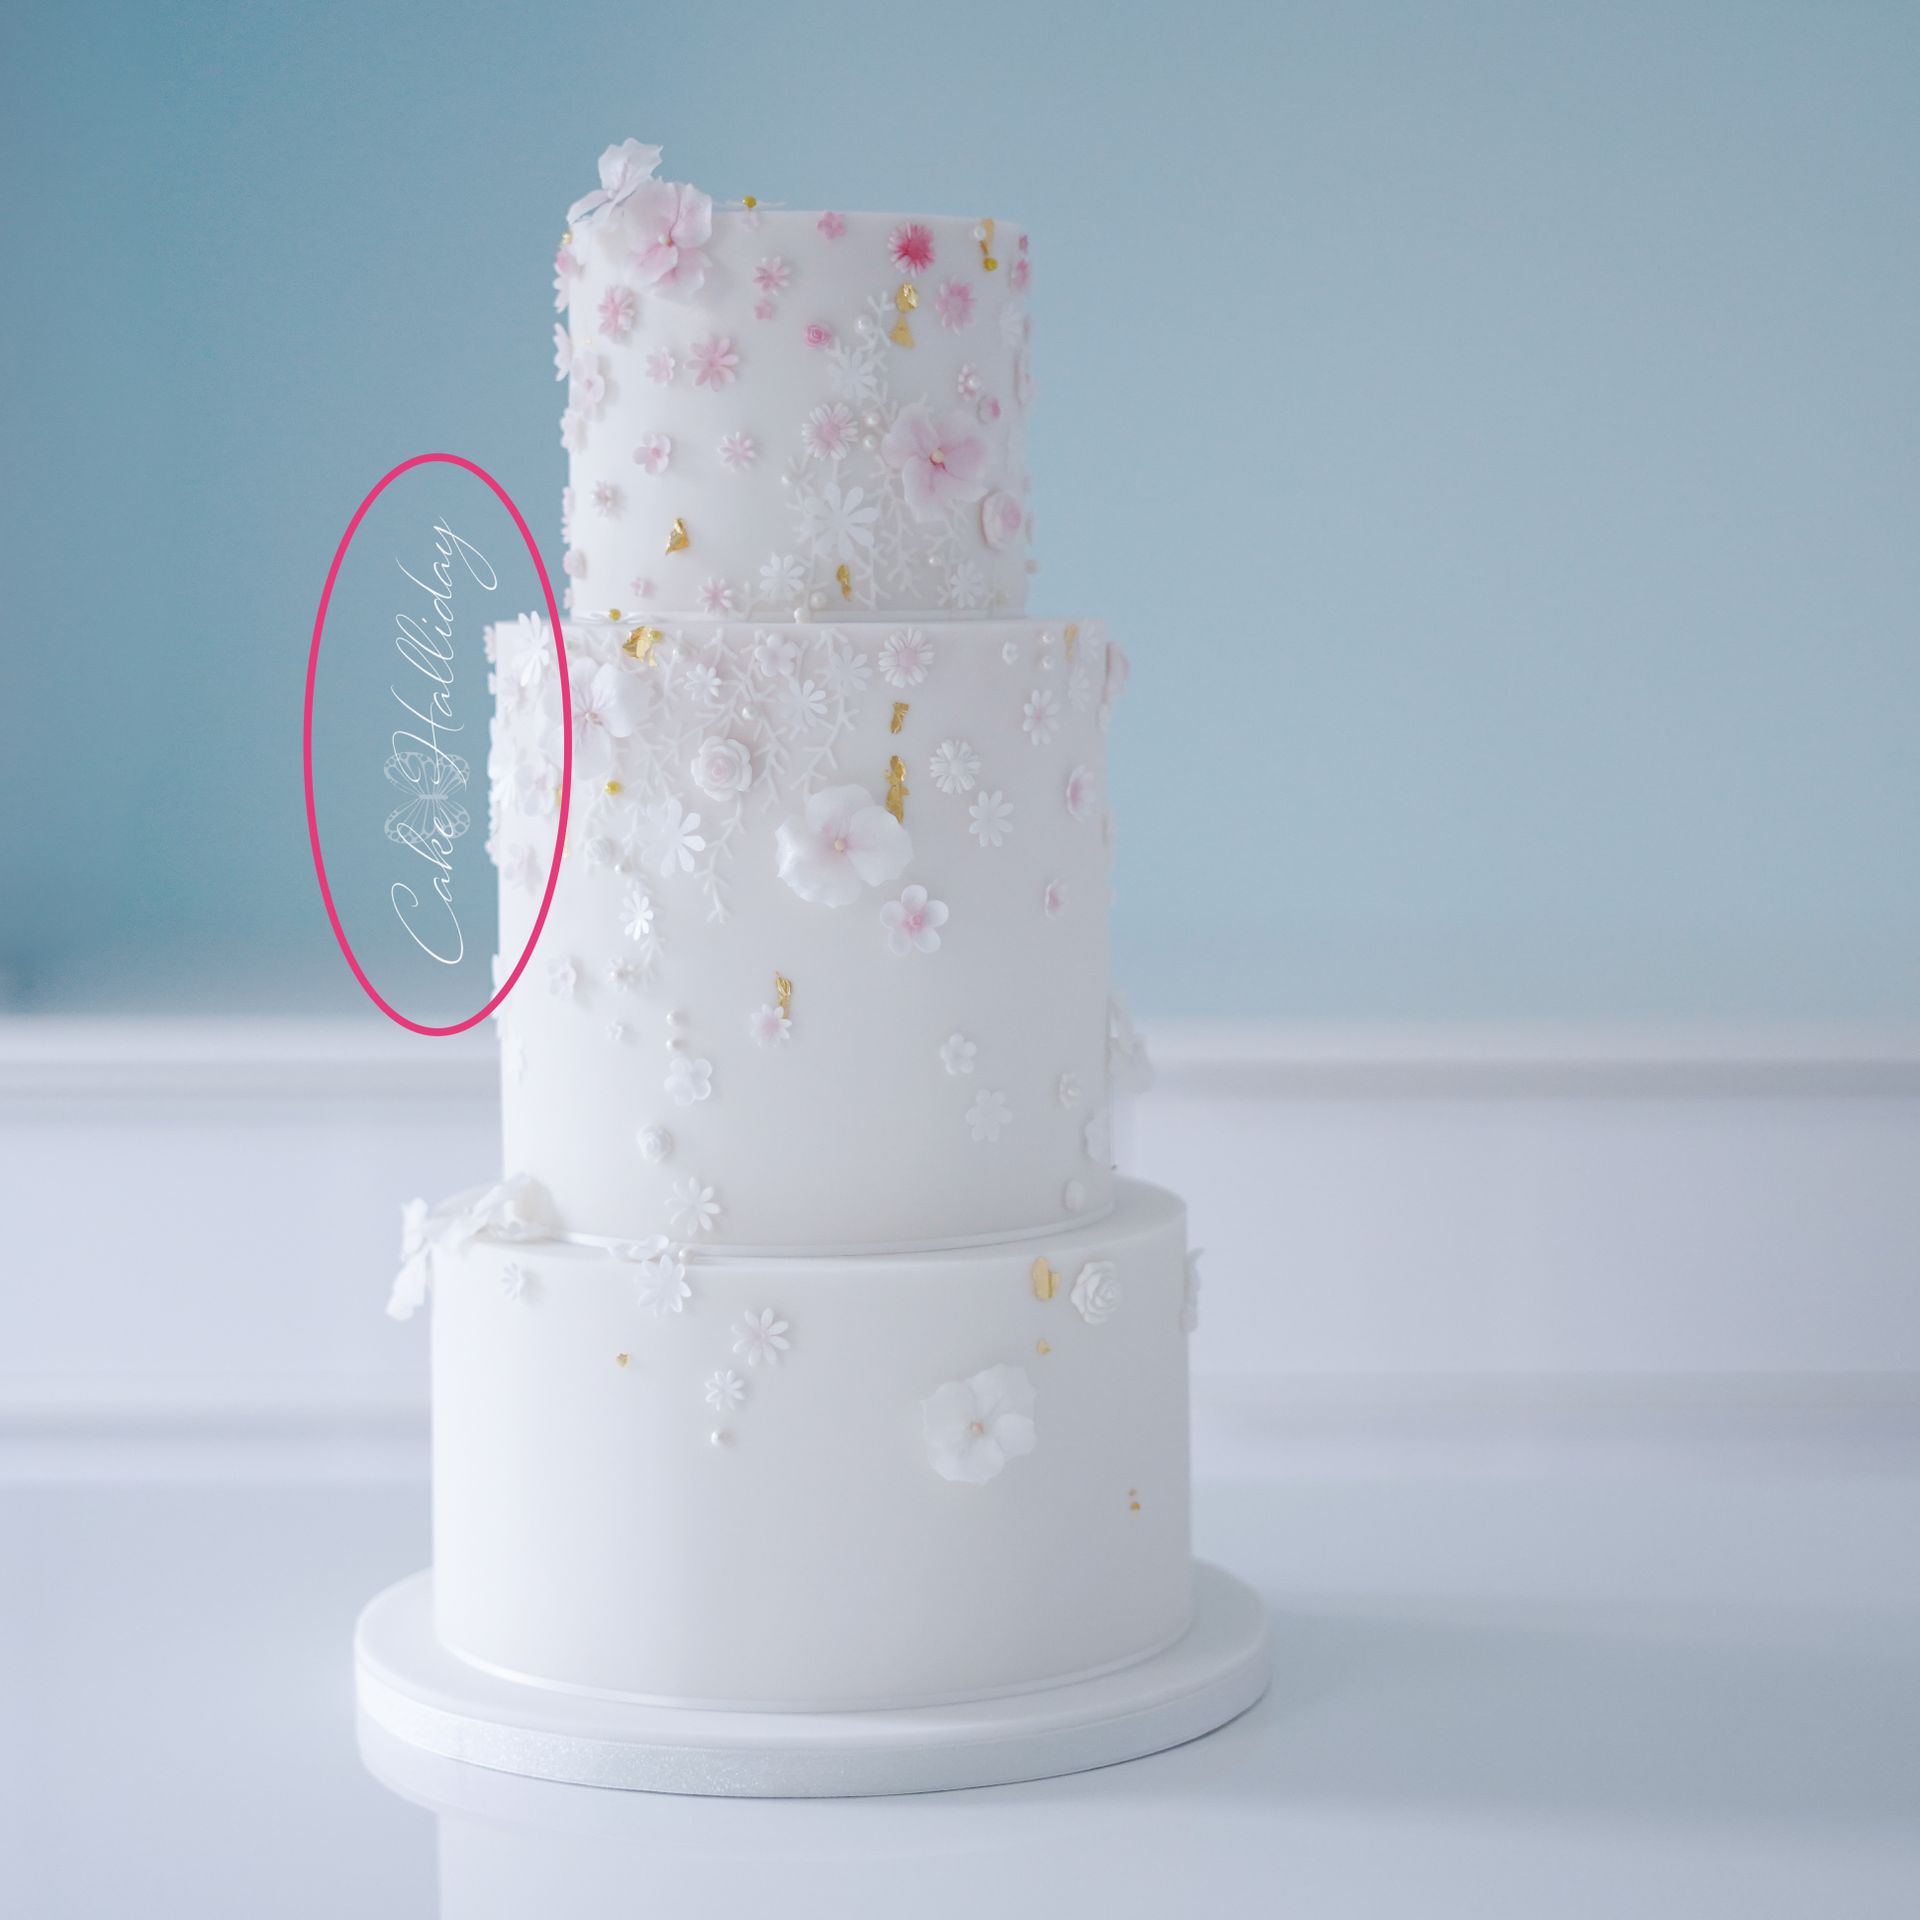 Blossom wedding cake image showing watermark